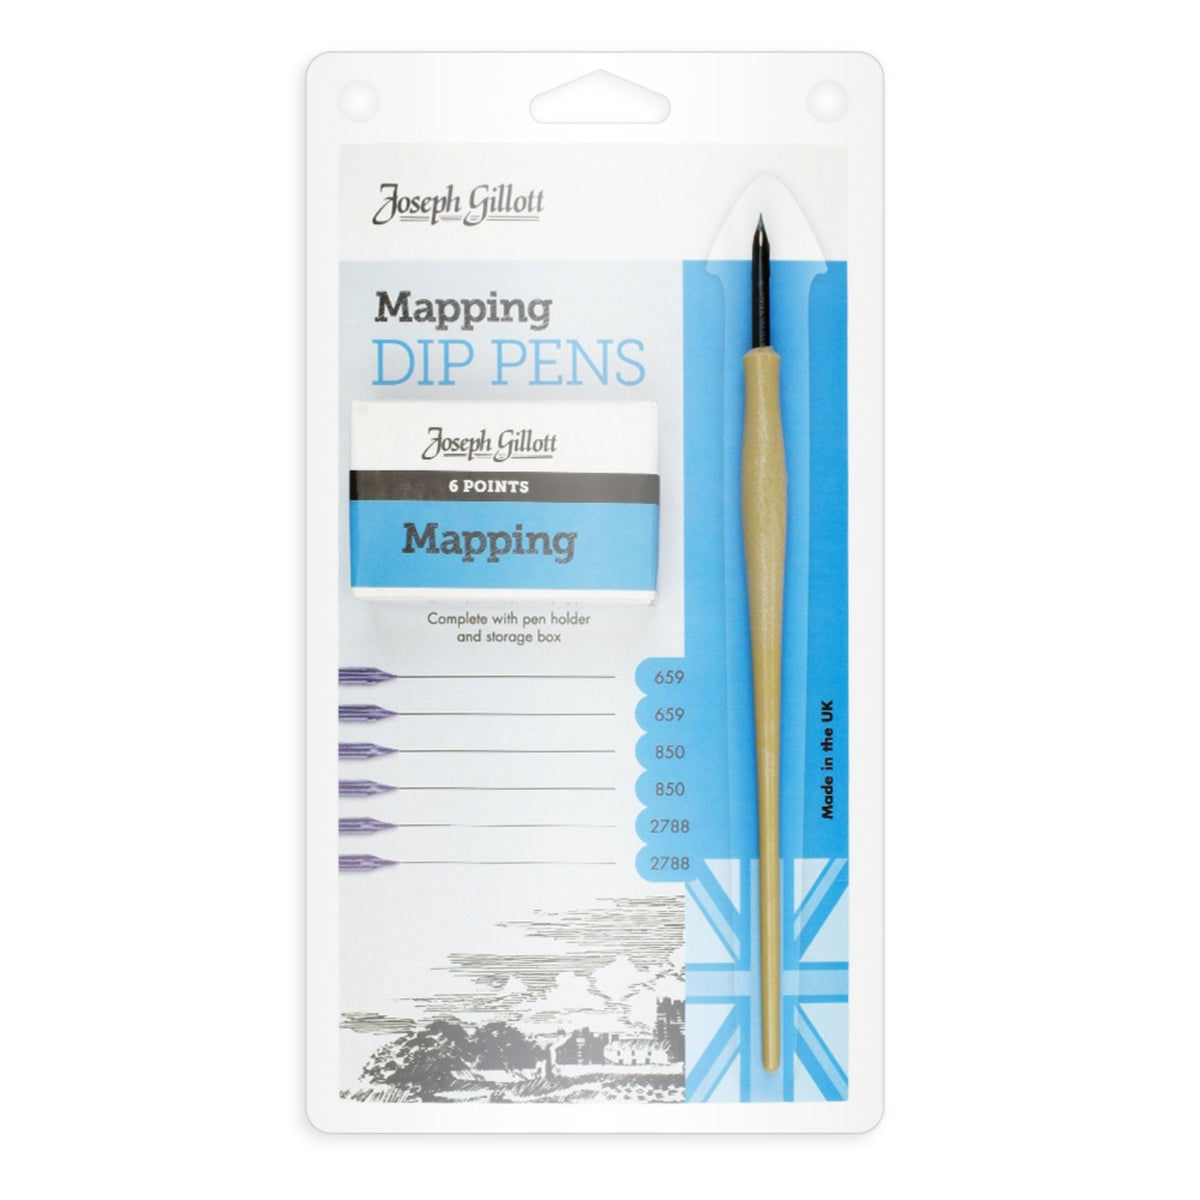 Joseph Gillott Mapping Dip Pens